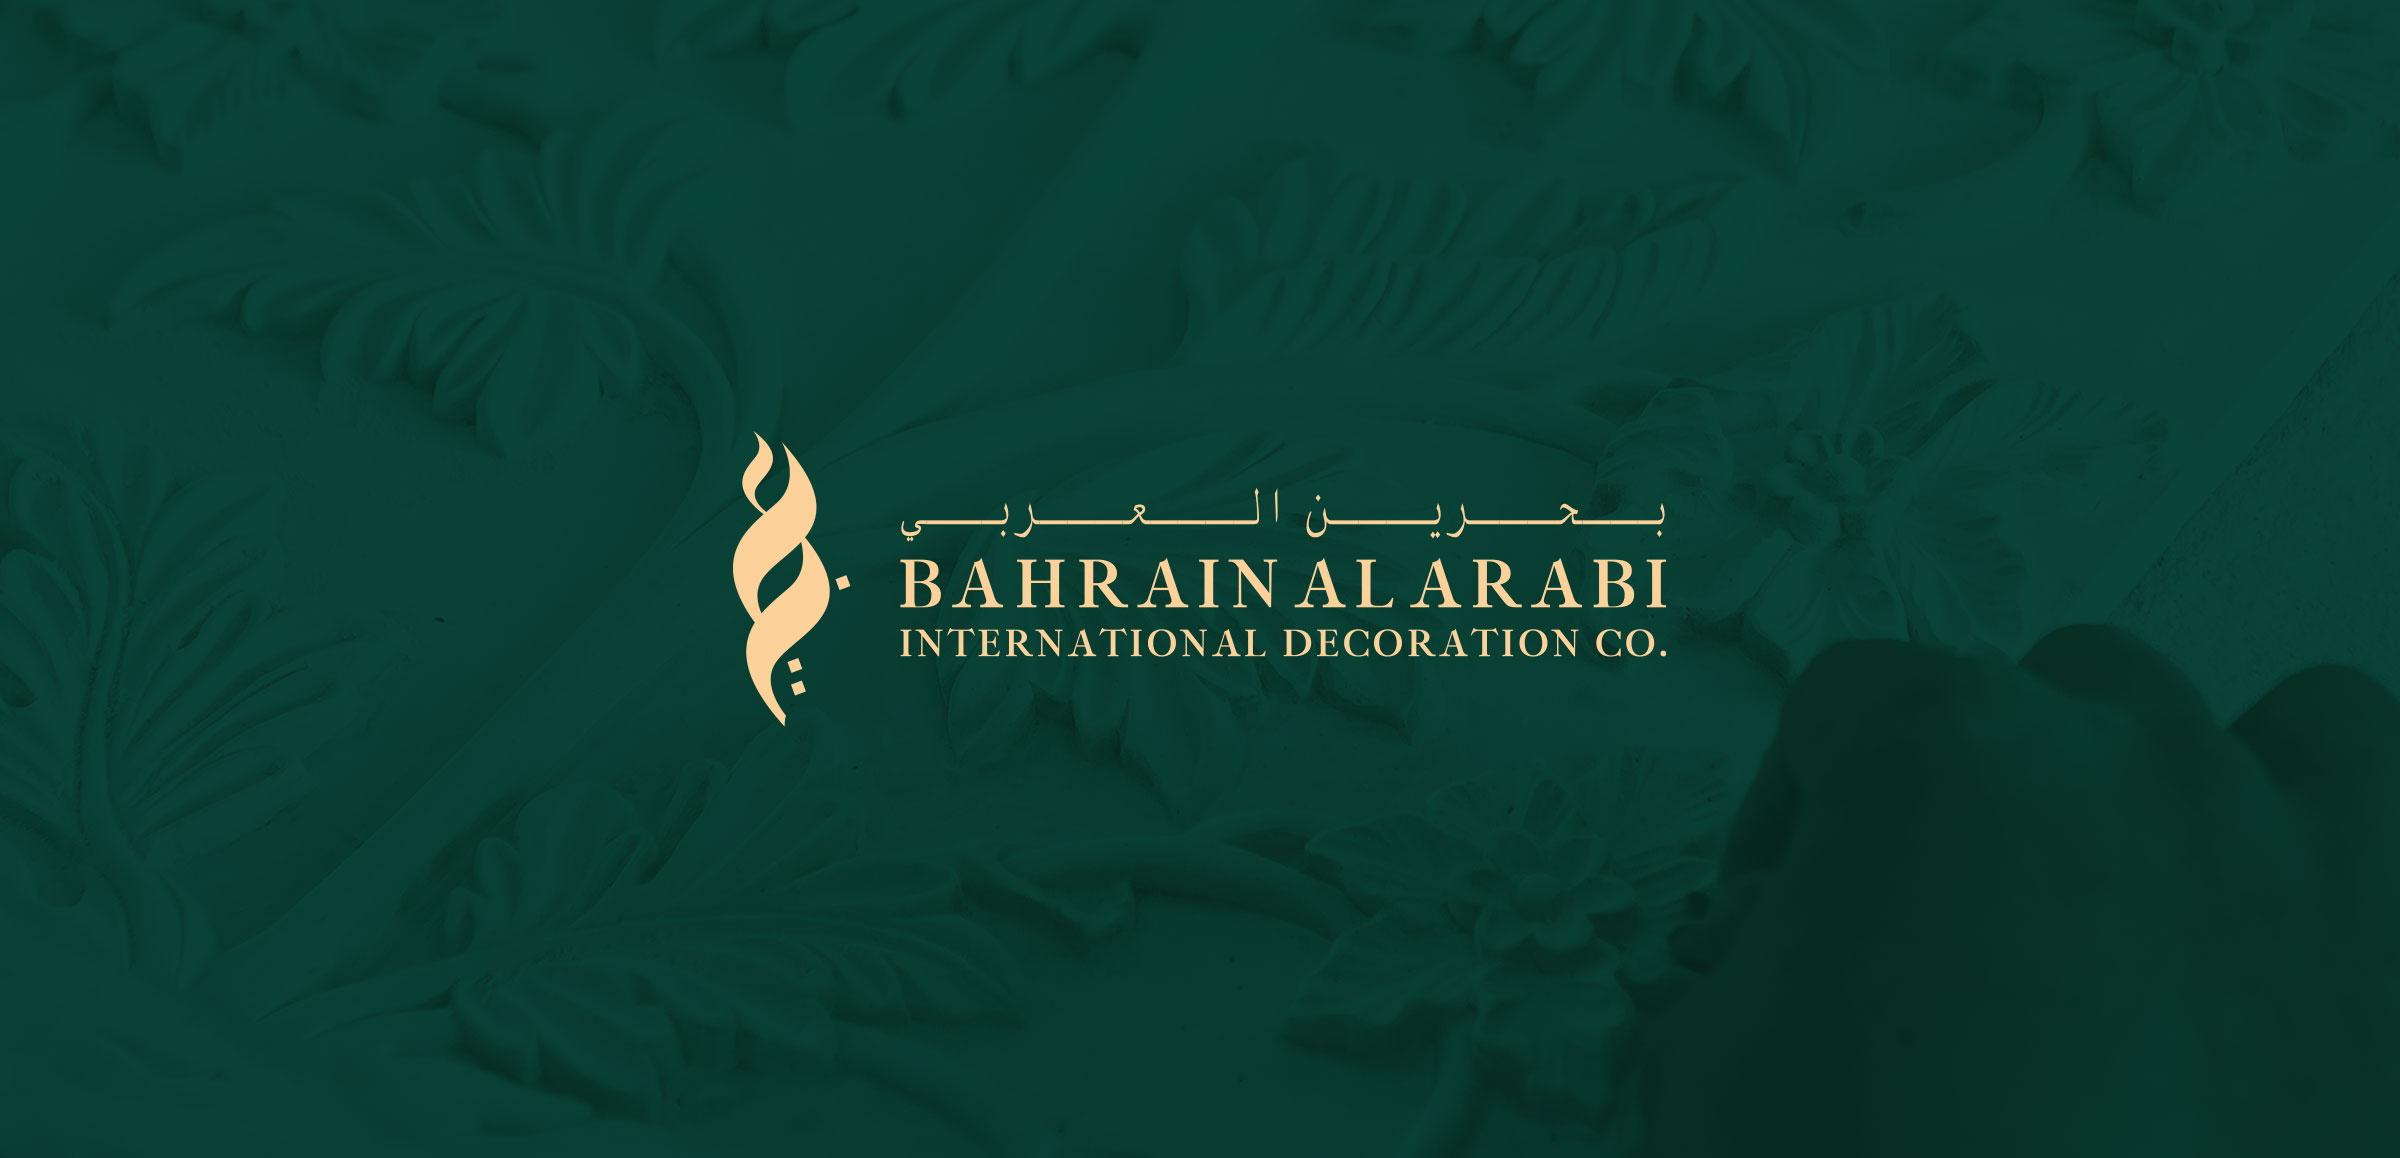 Bahrain Al Arabi International Decoration Co.